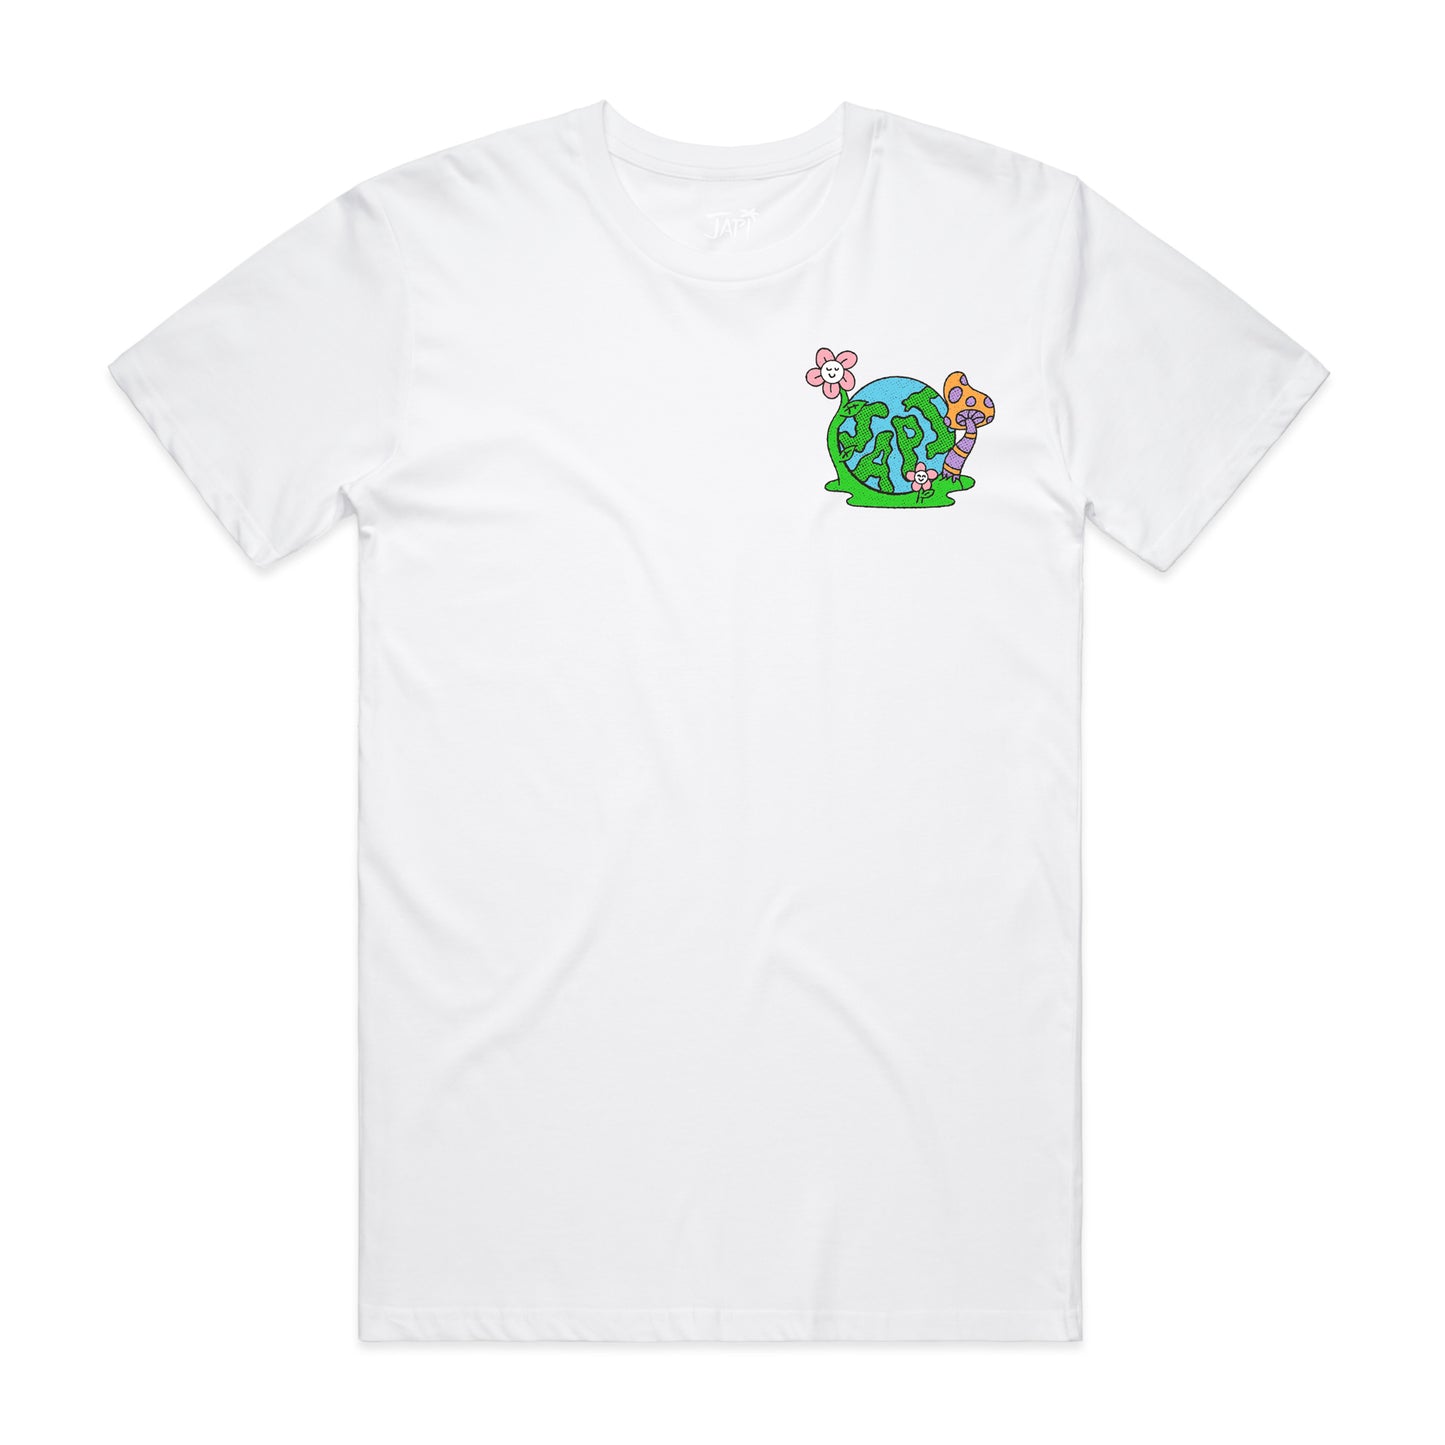 Planet Japi T-Shirt